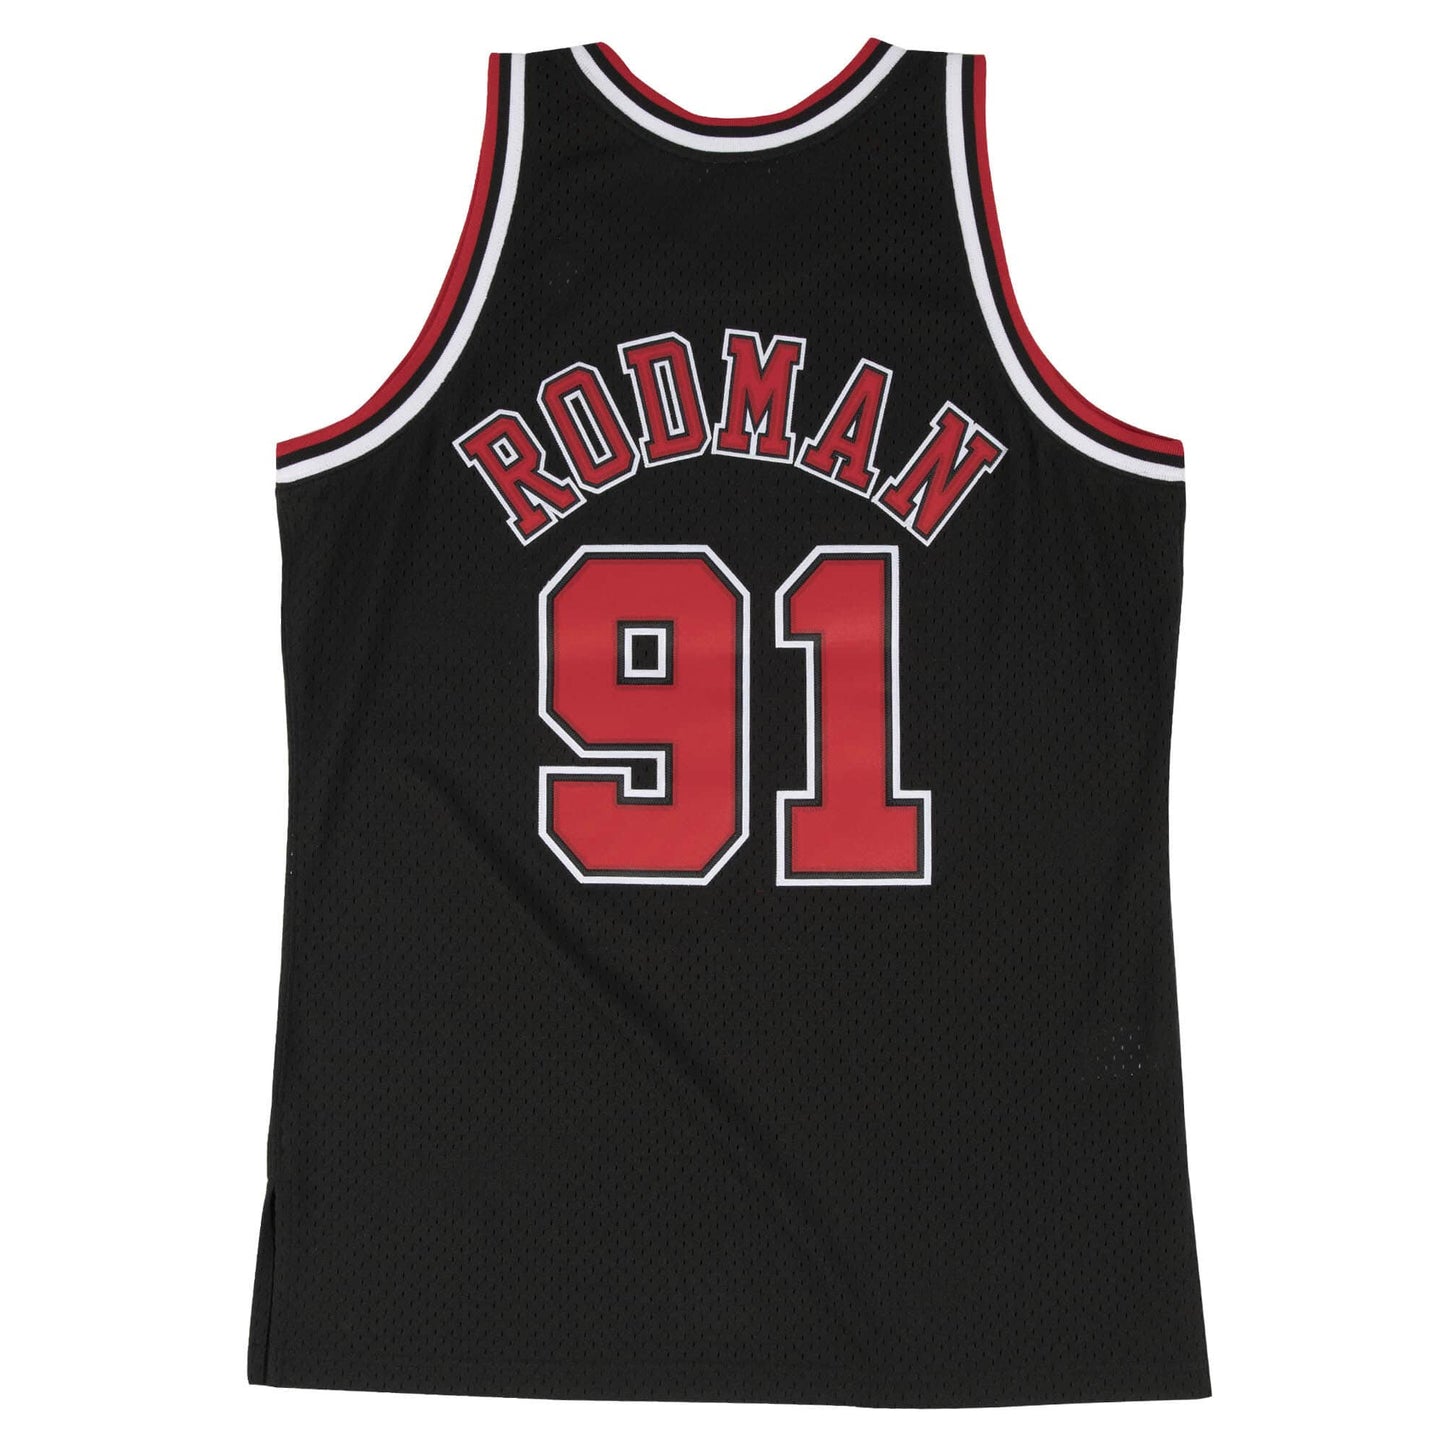 NBA Swingman Jersey Chicago Bulls Alternate 1997-98 Dennis Rodman